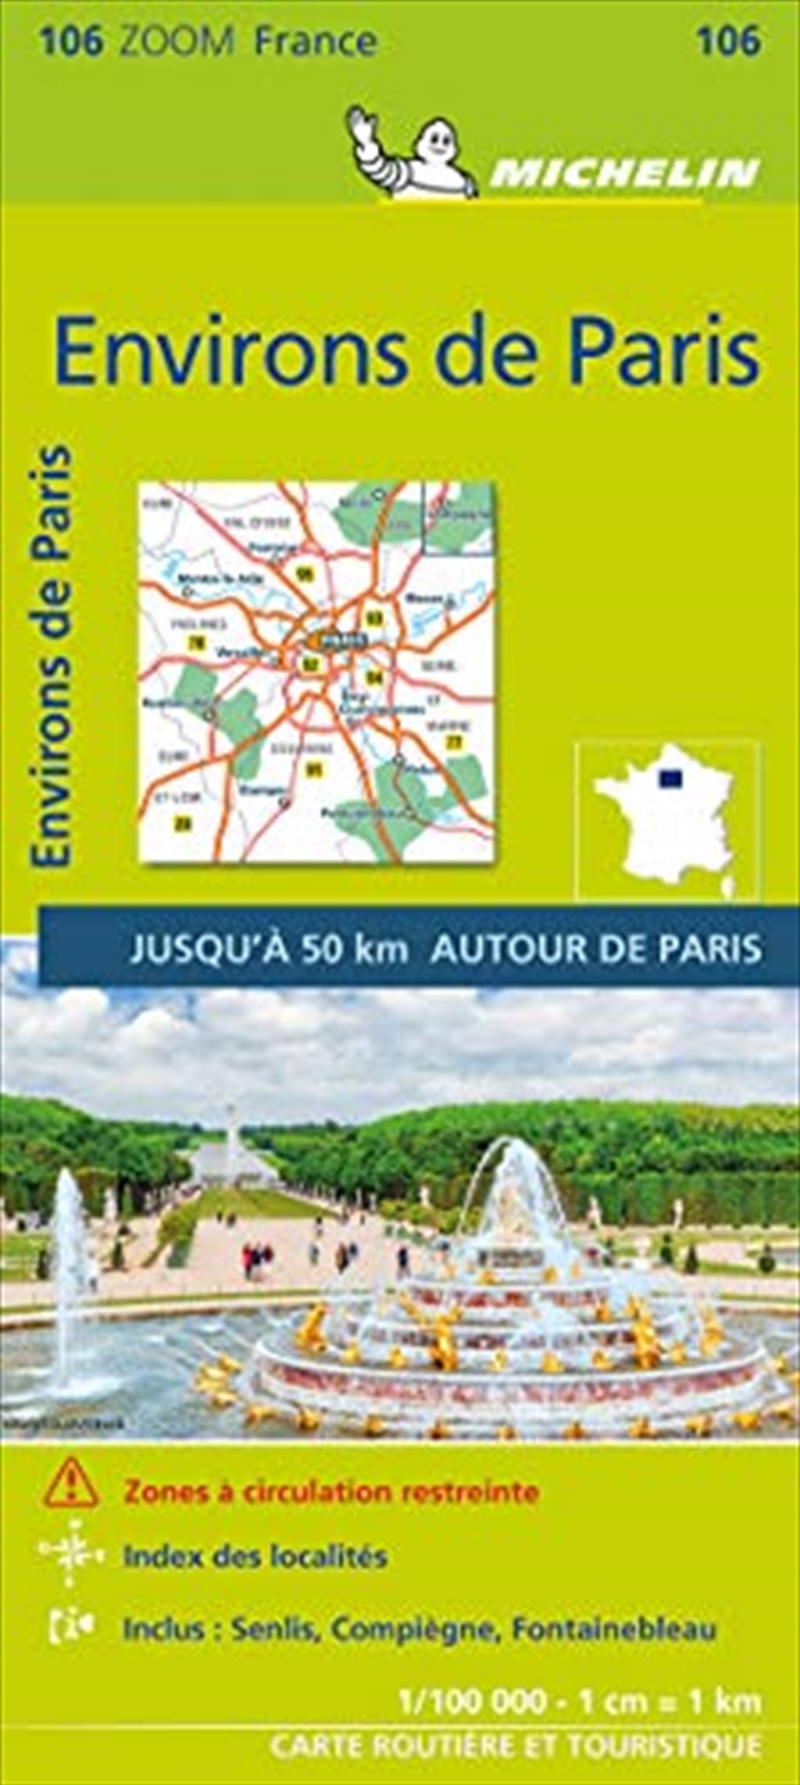 Environs de Paris (CARTES, 4610) (French Edition)/Product Detail/Recipes, Food & Drink